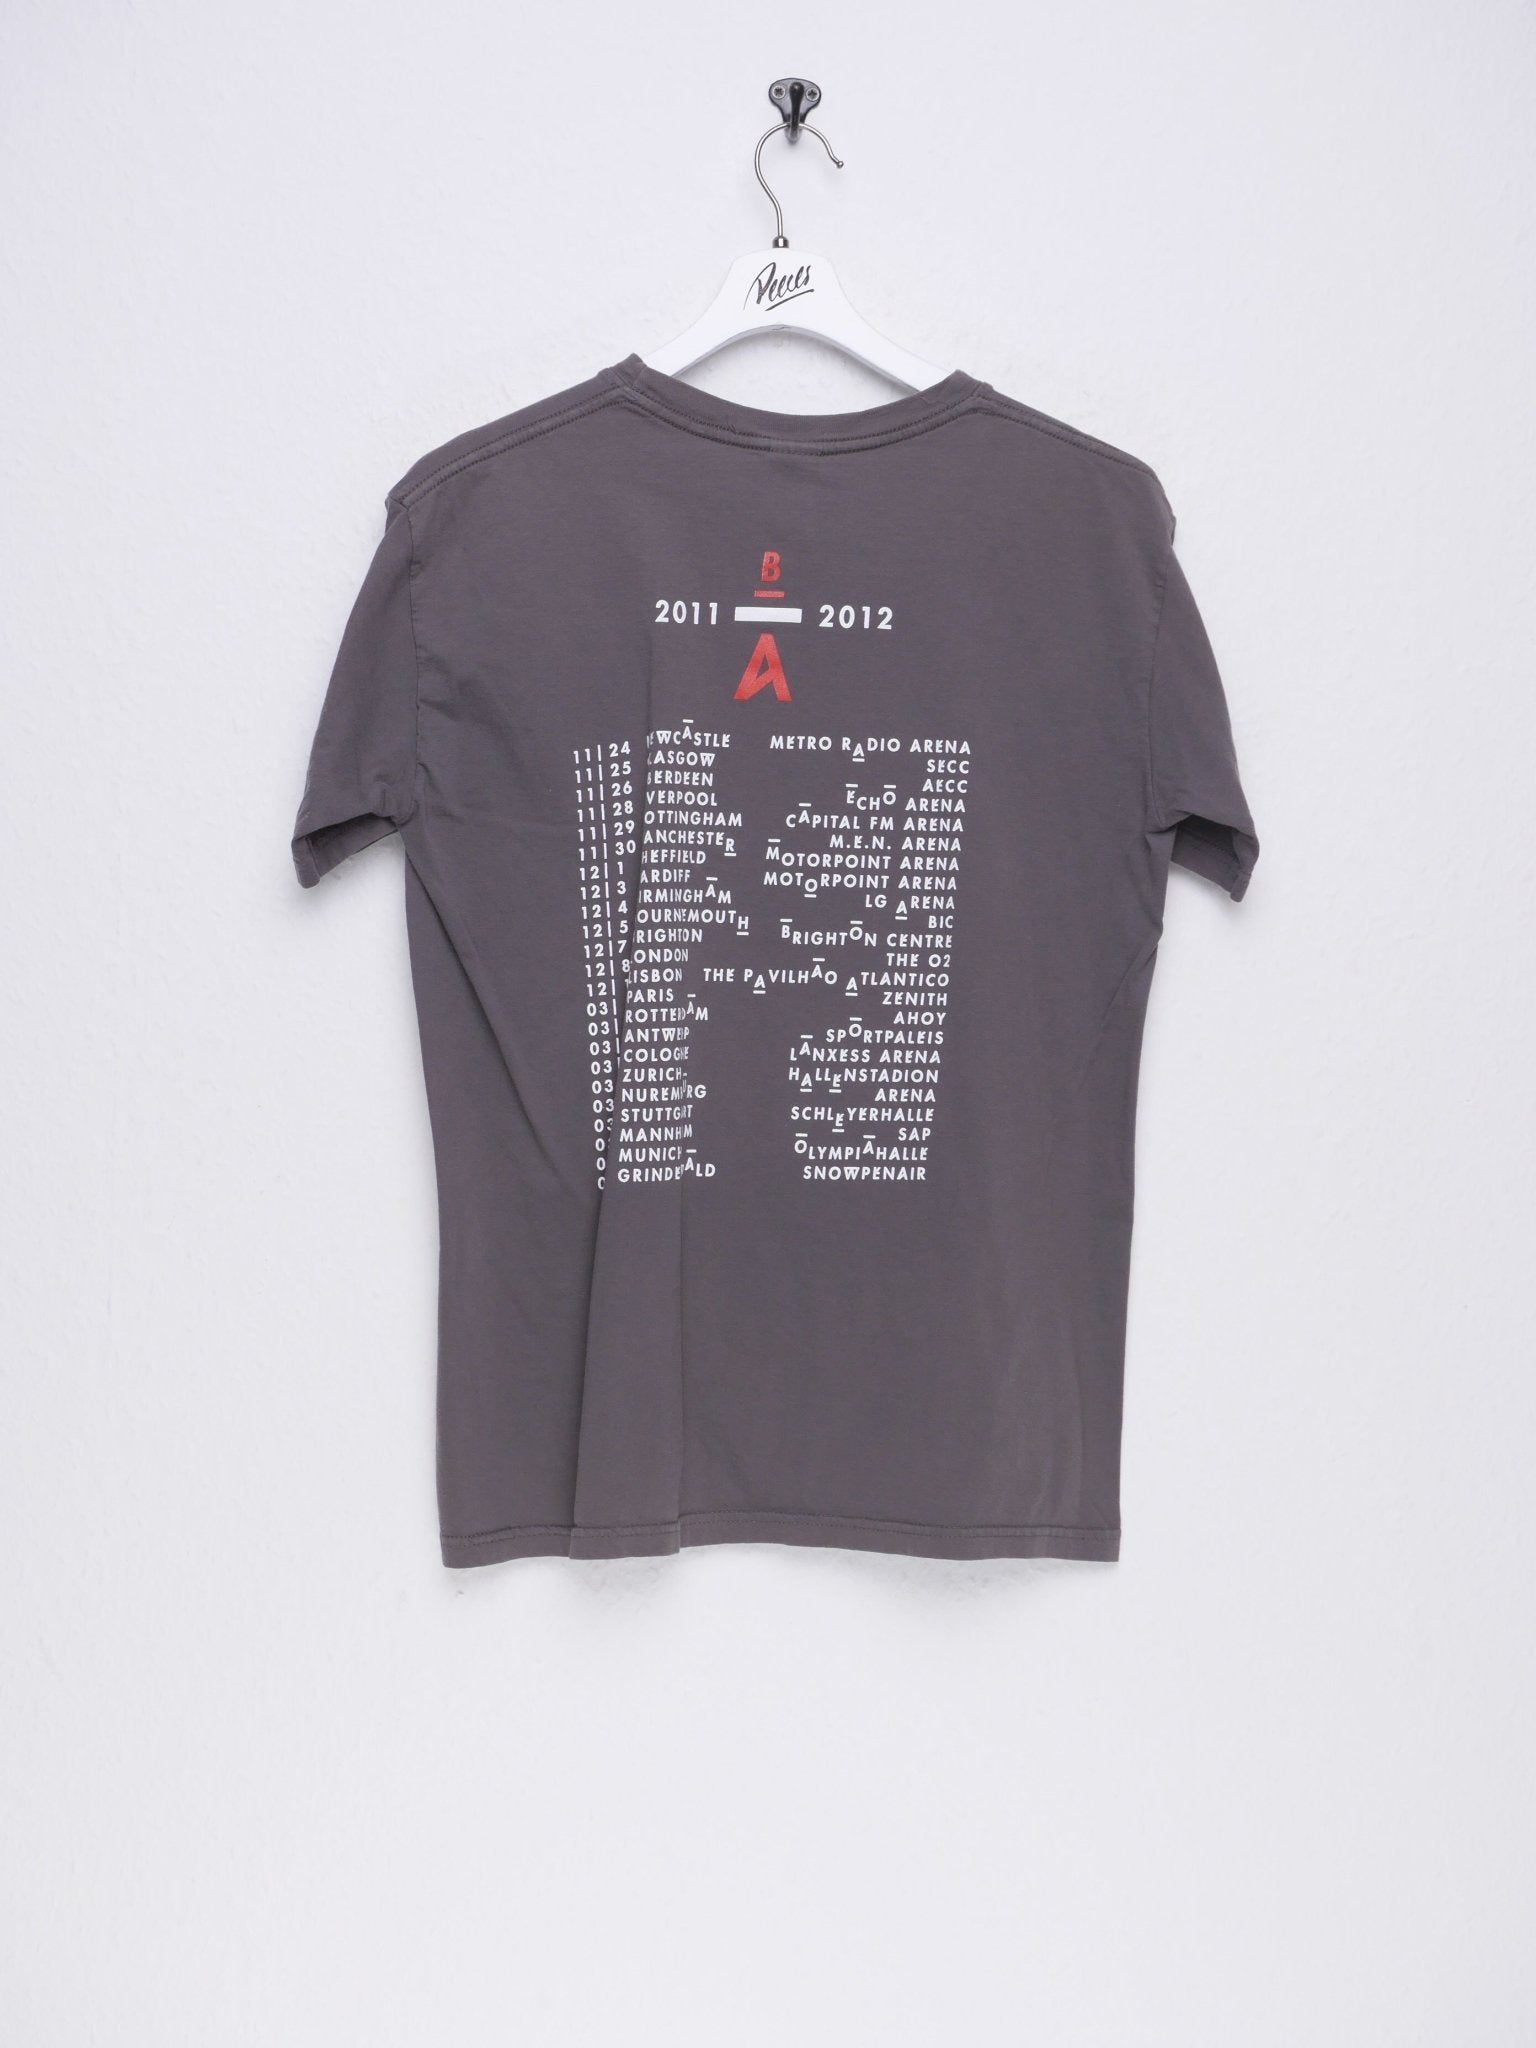 gildan 'Bryan Adams' printed Graphic grey Shirt - Peeces